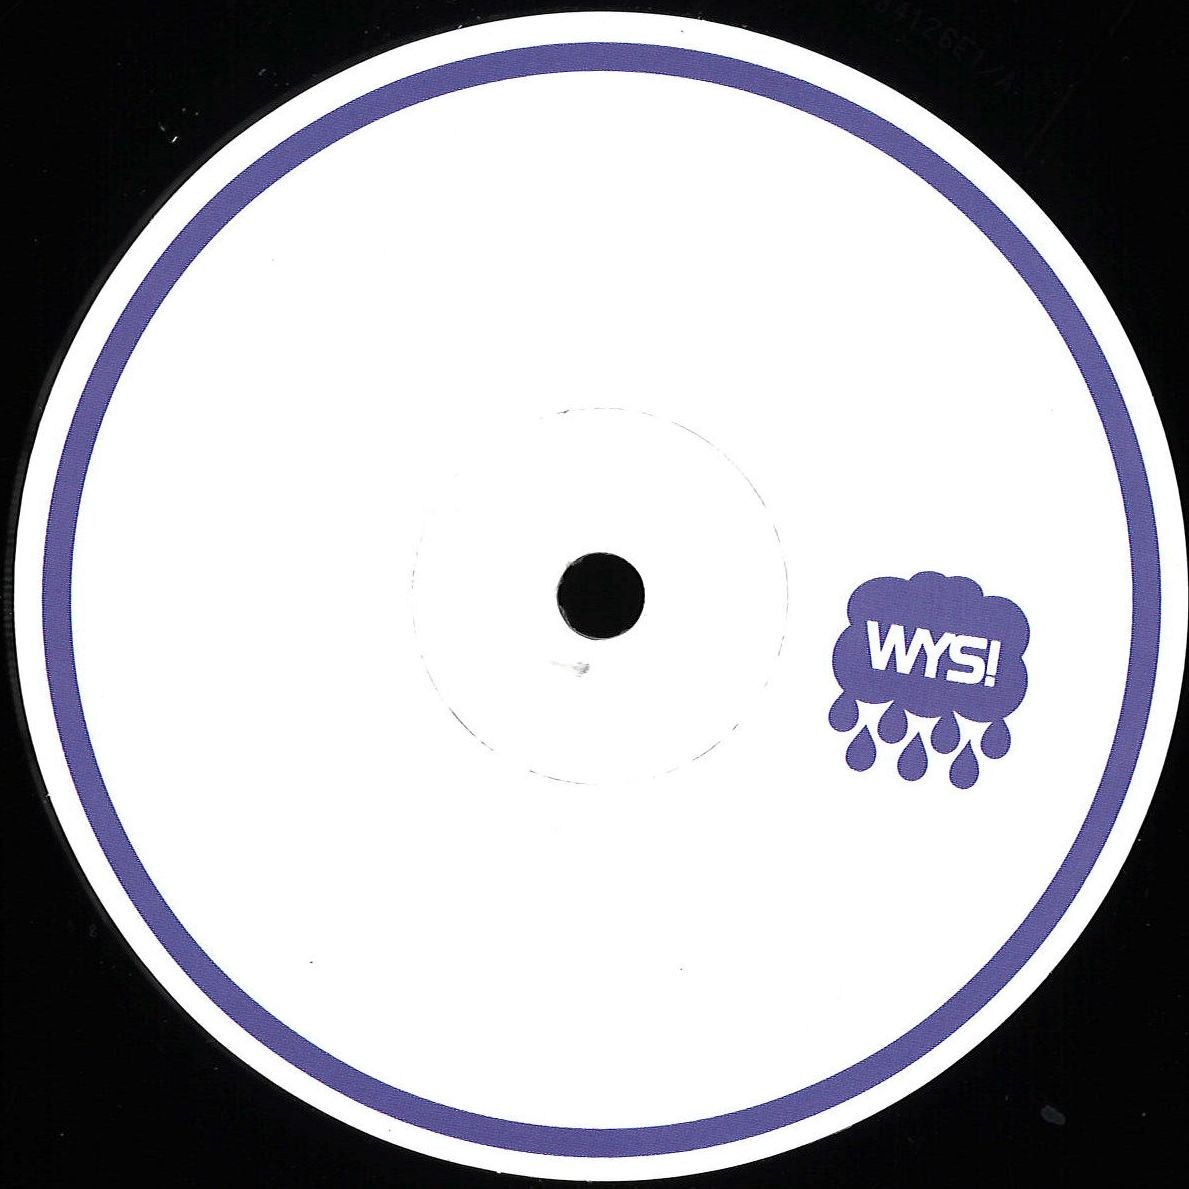 image cover: VA - WYS! Limited #03 / WYSL003